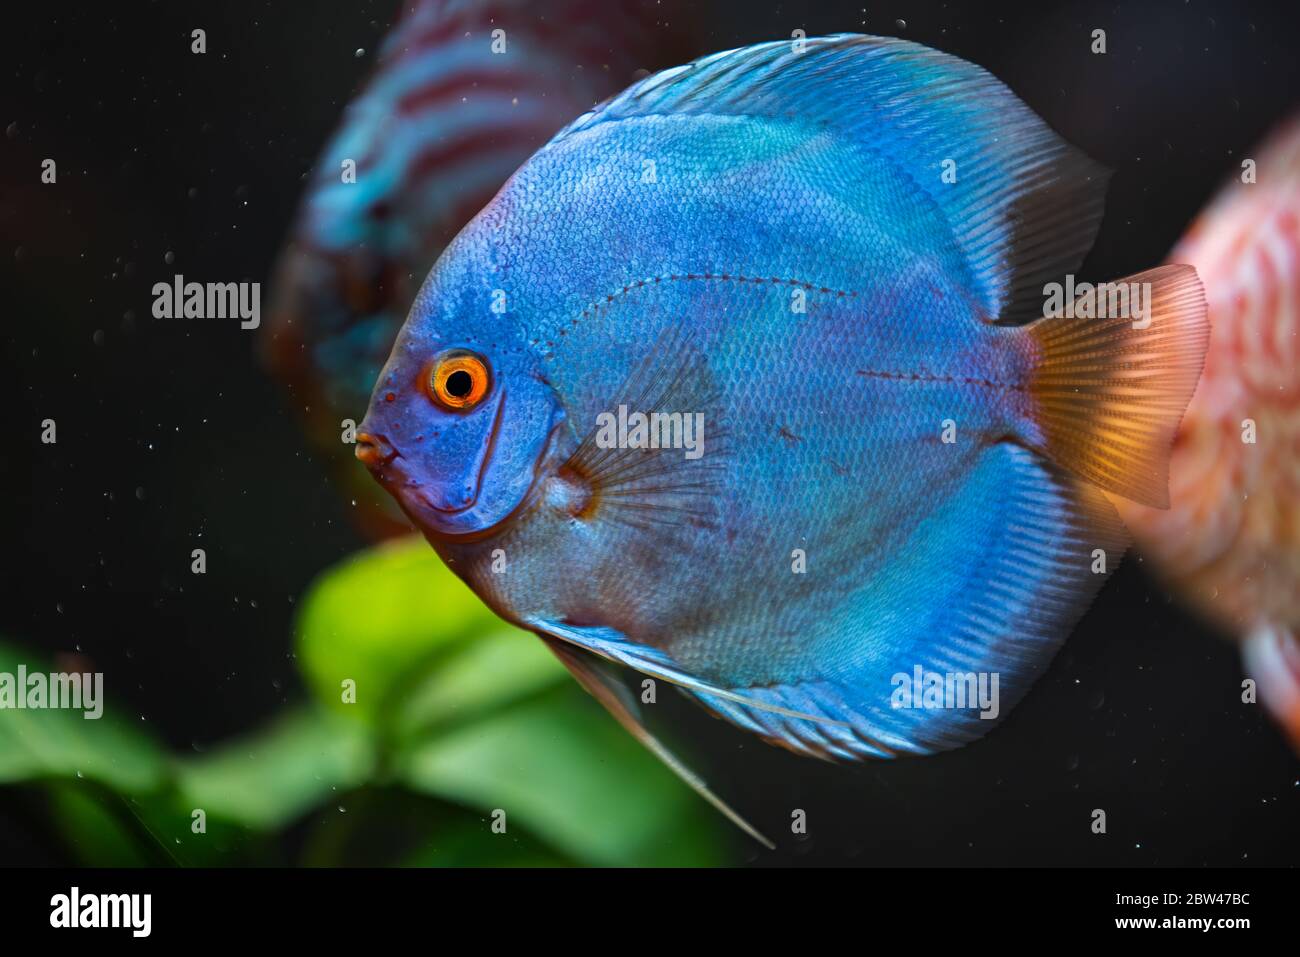 Blue vibrant discus fish in a fishtank. Stock Photo